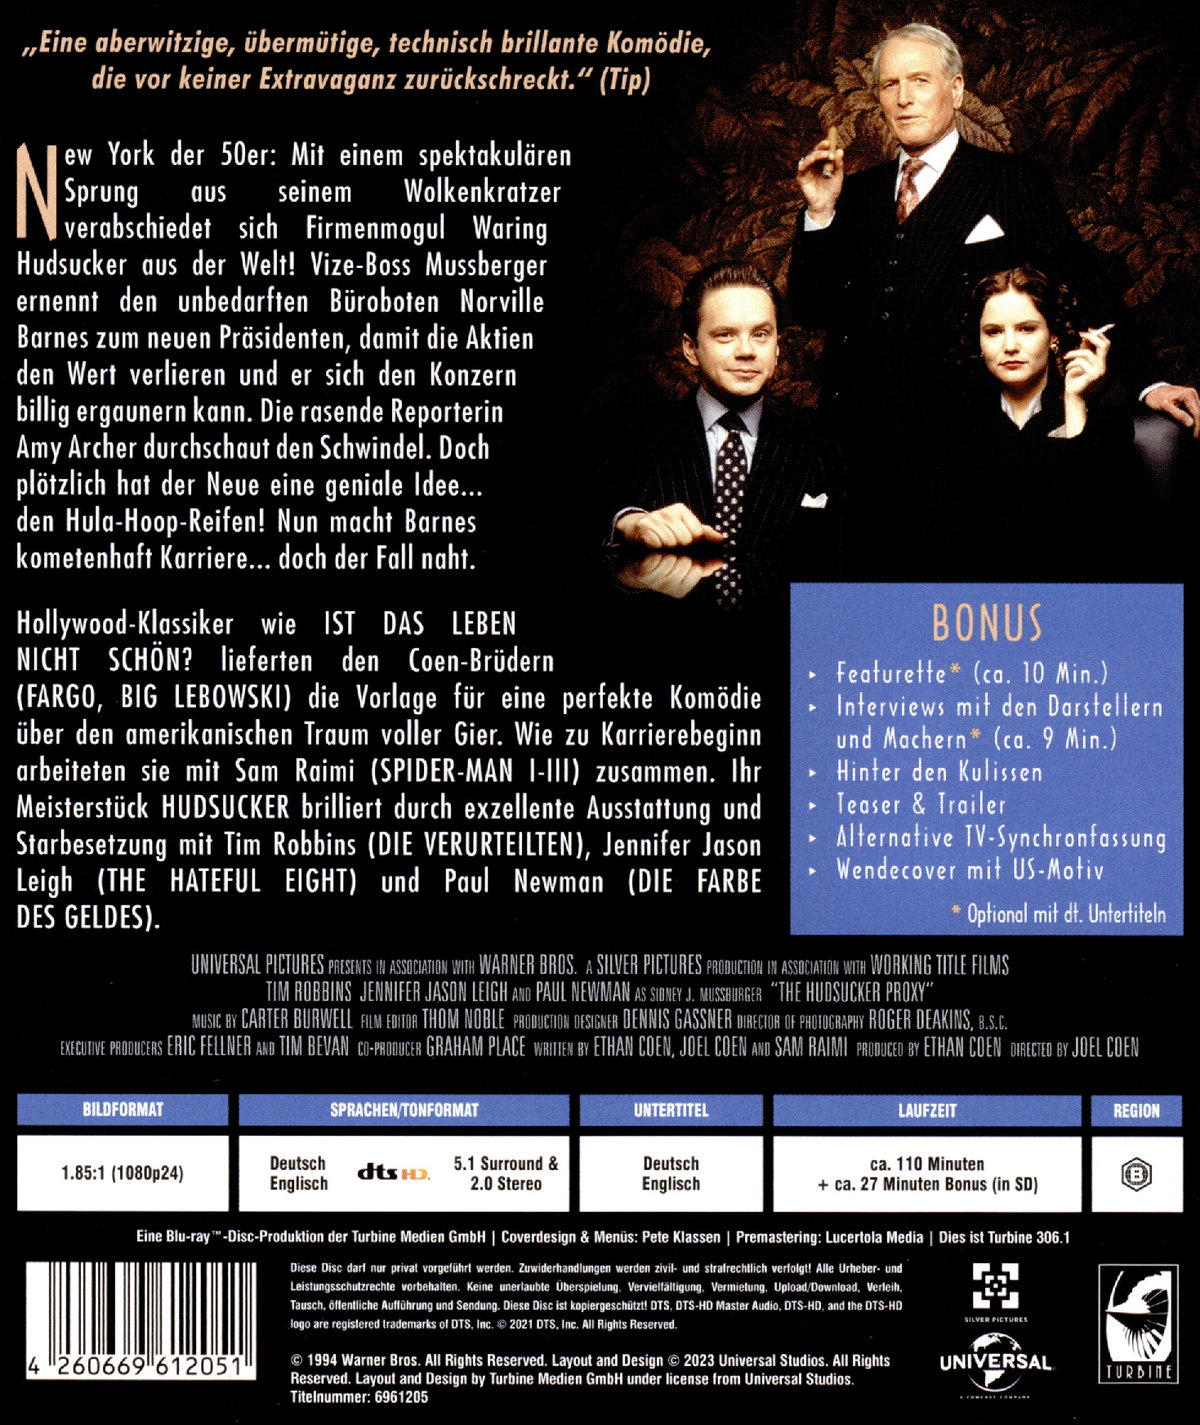 Hudsucker - Der große Sprung - The Hudsucker Proxy (Blu-ray)